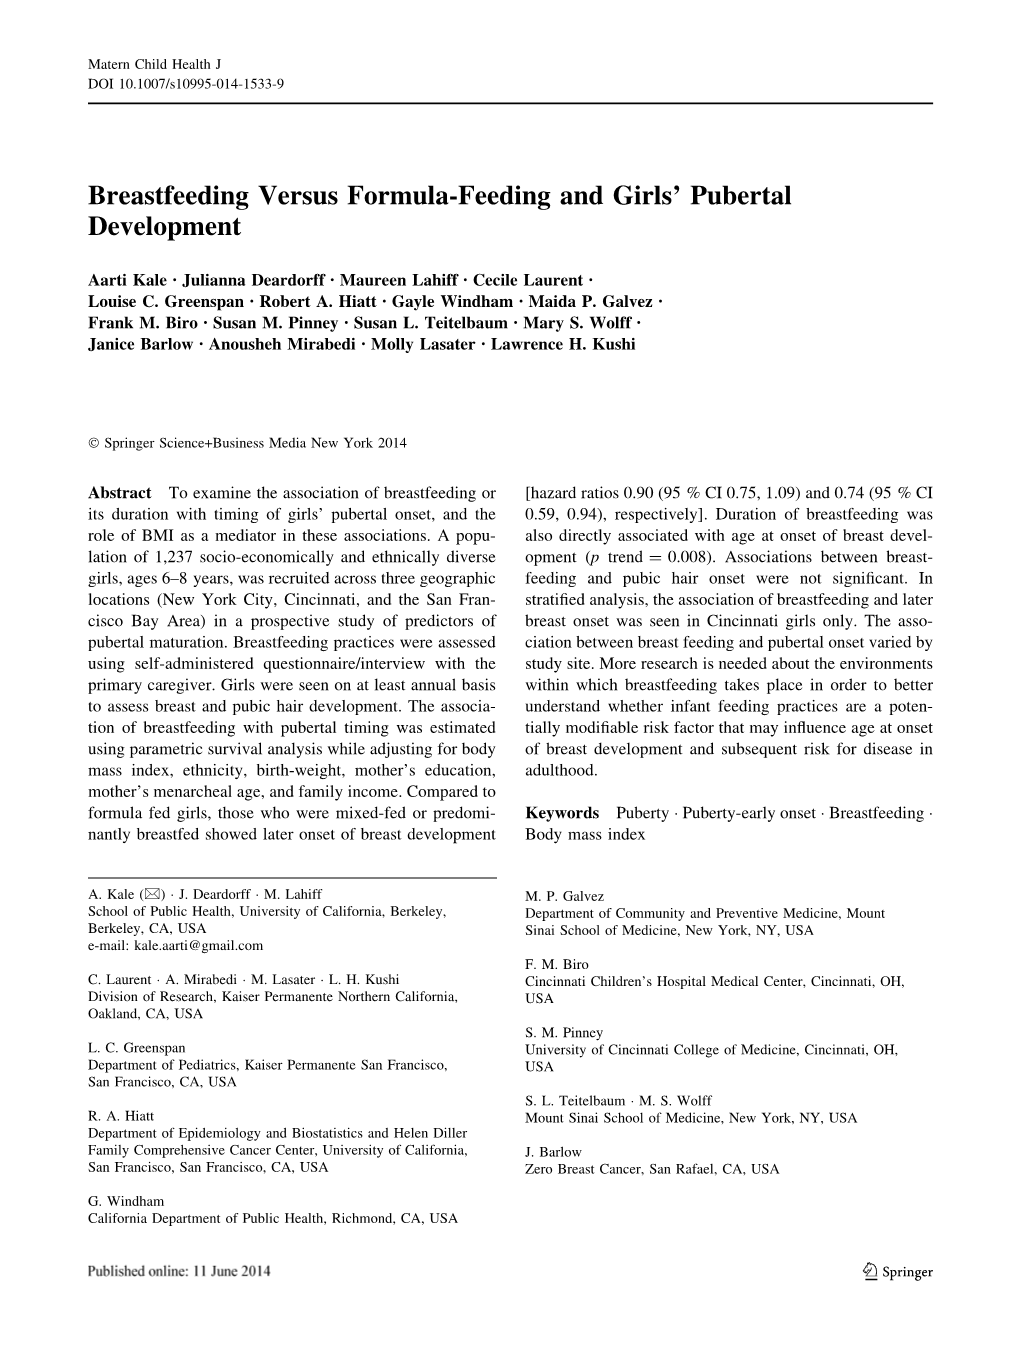 Breastfeeding Versus Formula-Feeding and Girls’ Pubertal Development